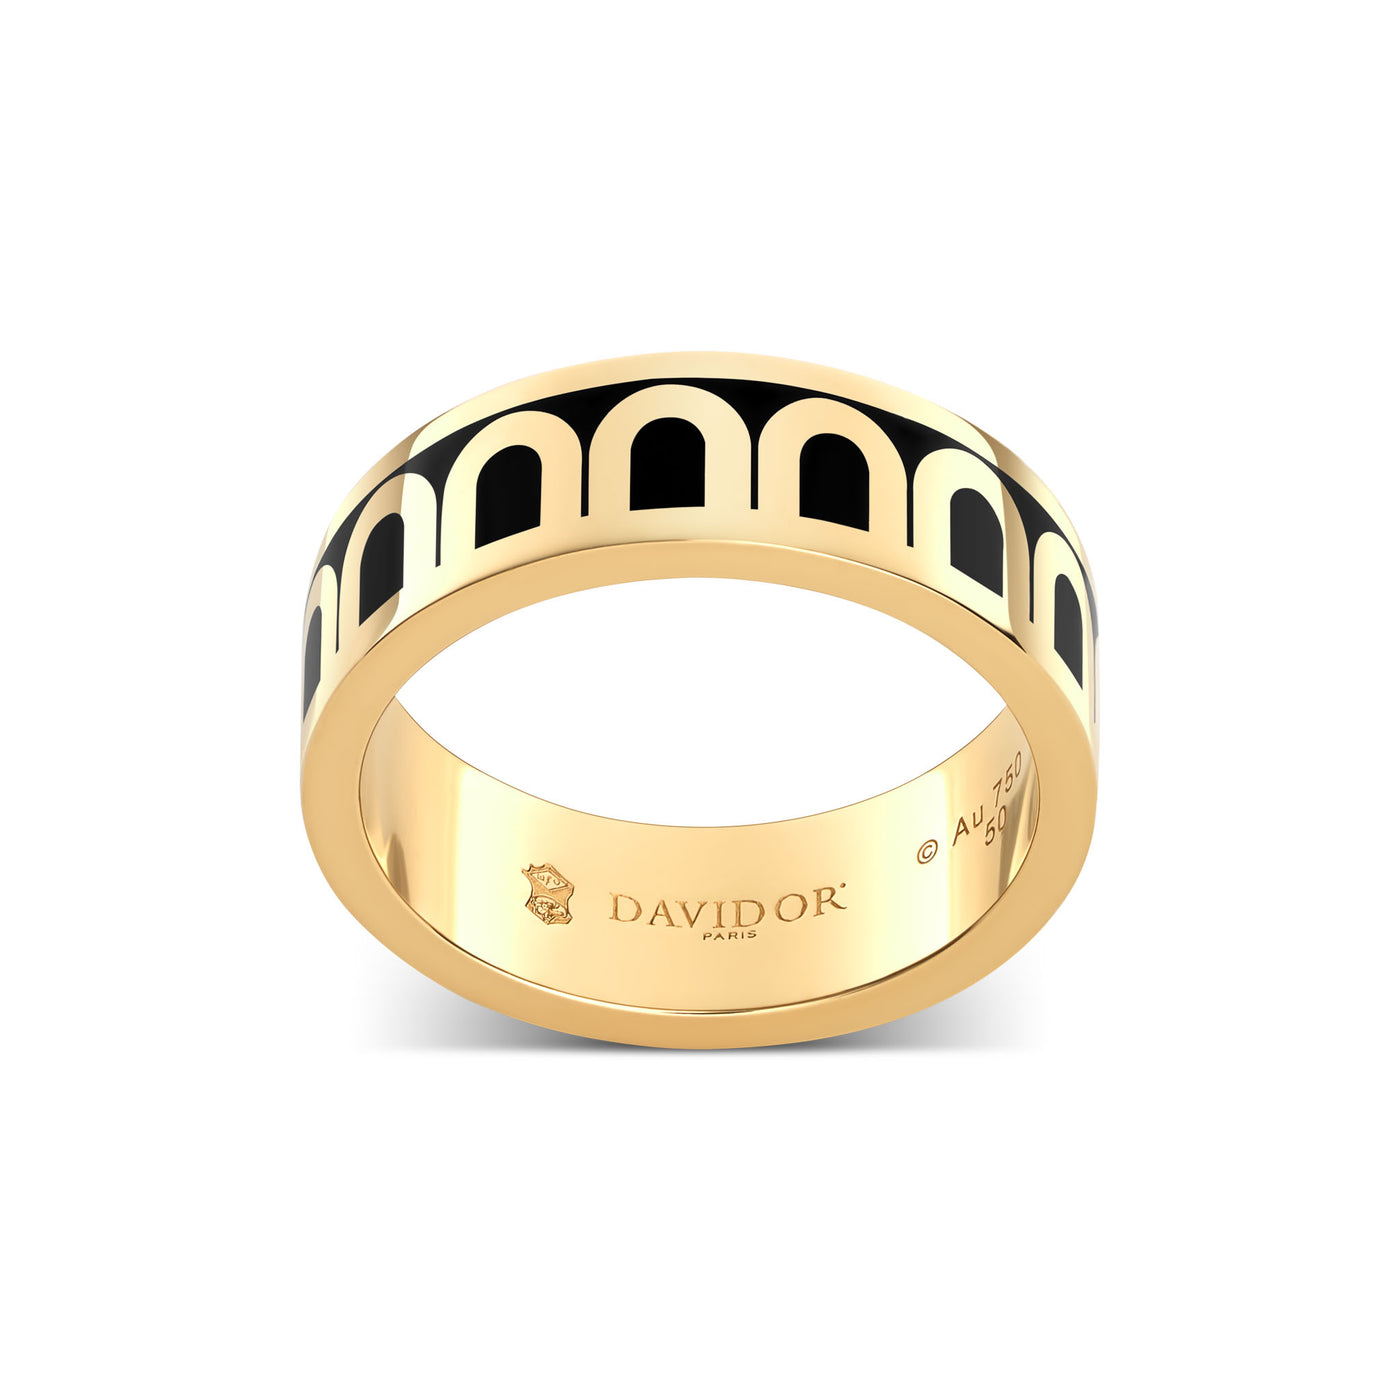 L'Arc de DAVIDOR Ring MM, 18k Yellow Gold with Caviar Lacquered Ceramic